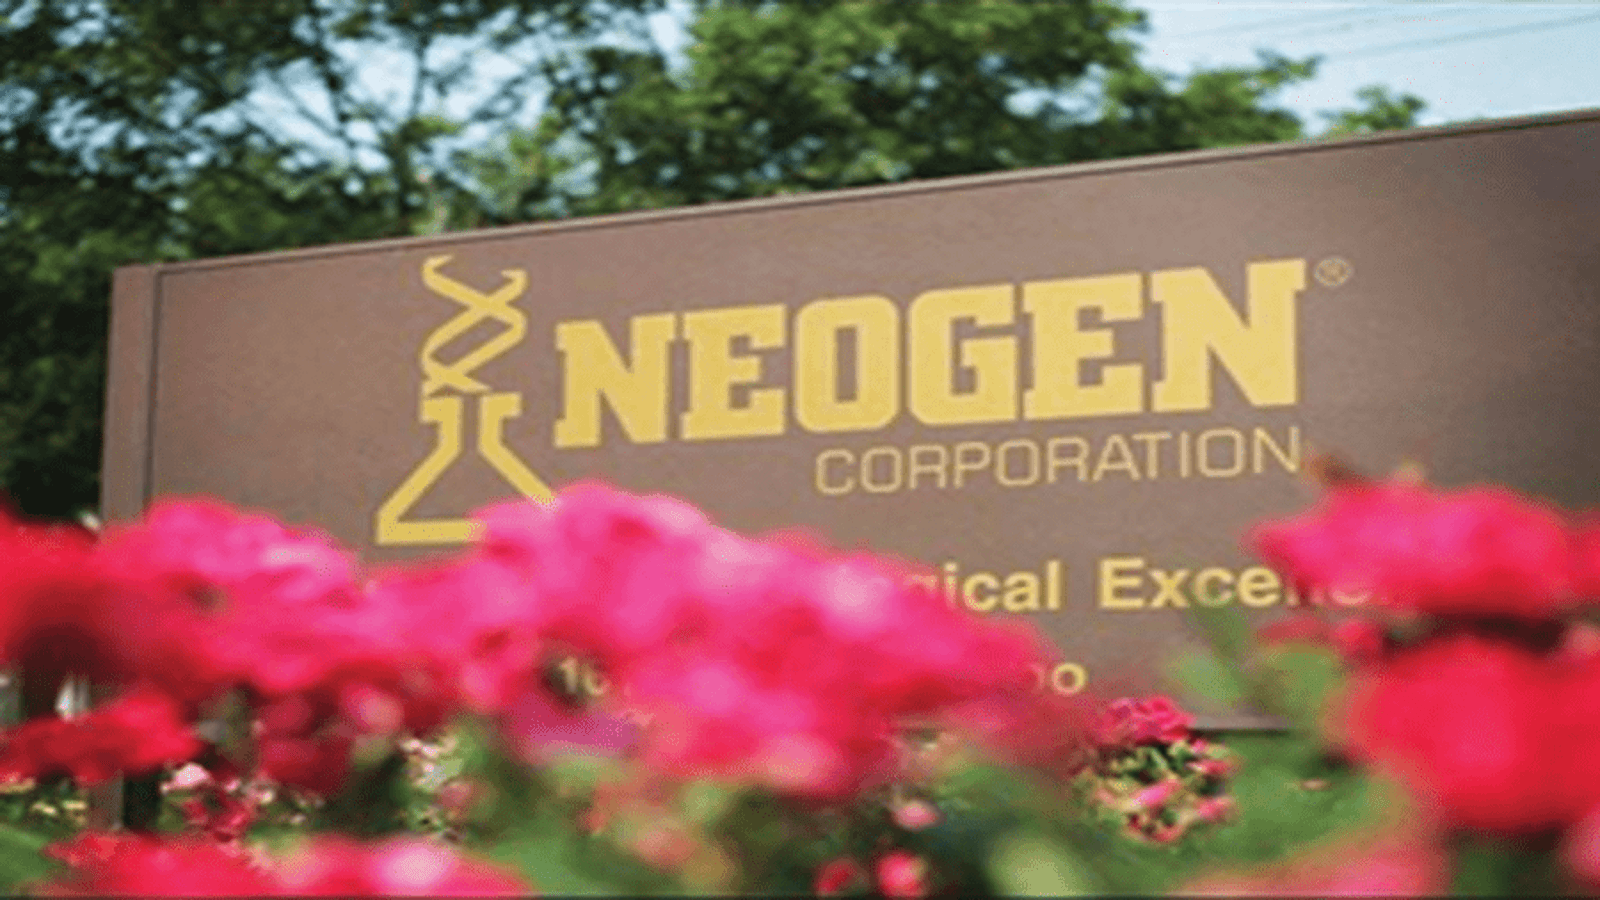 Neogen offers enhanced quantitative analysis of peanut residue with new Peanut allergen test